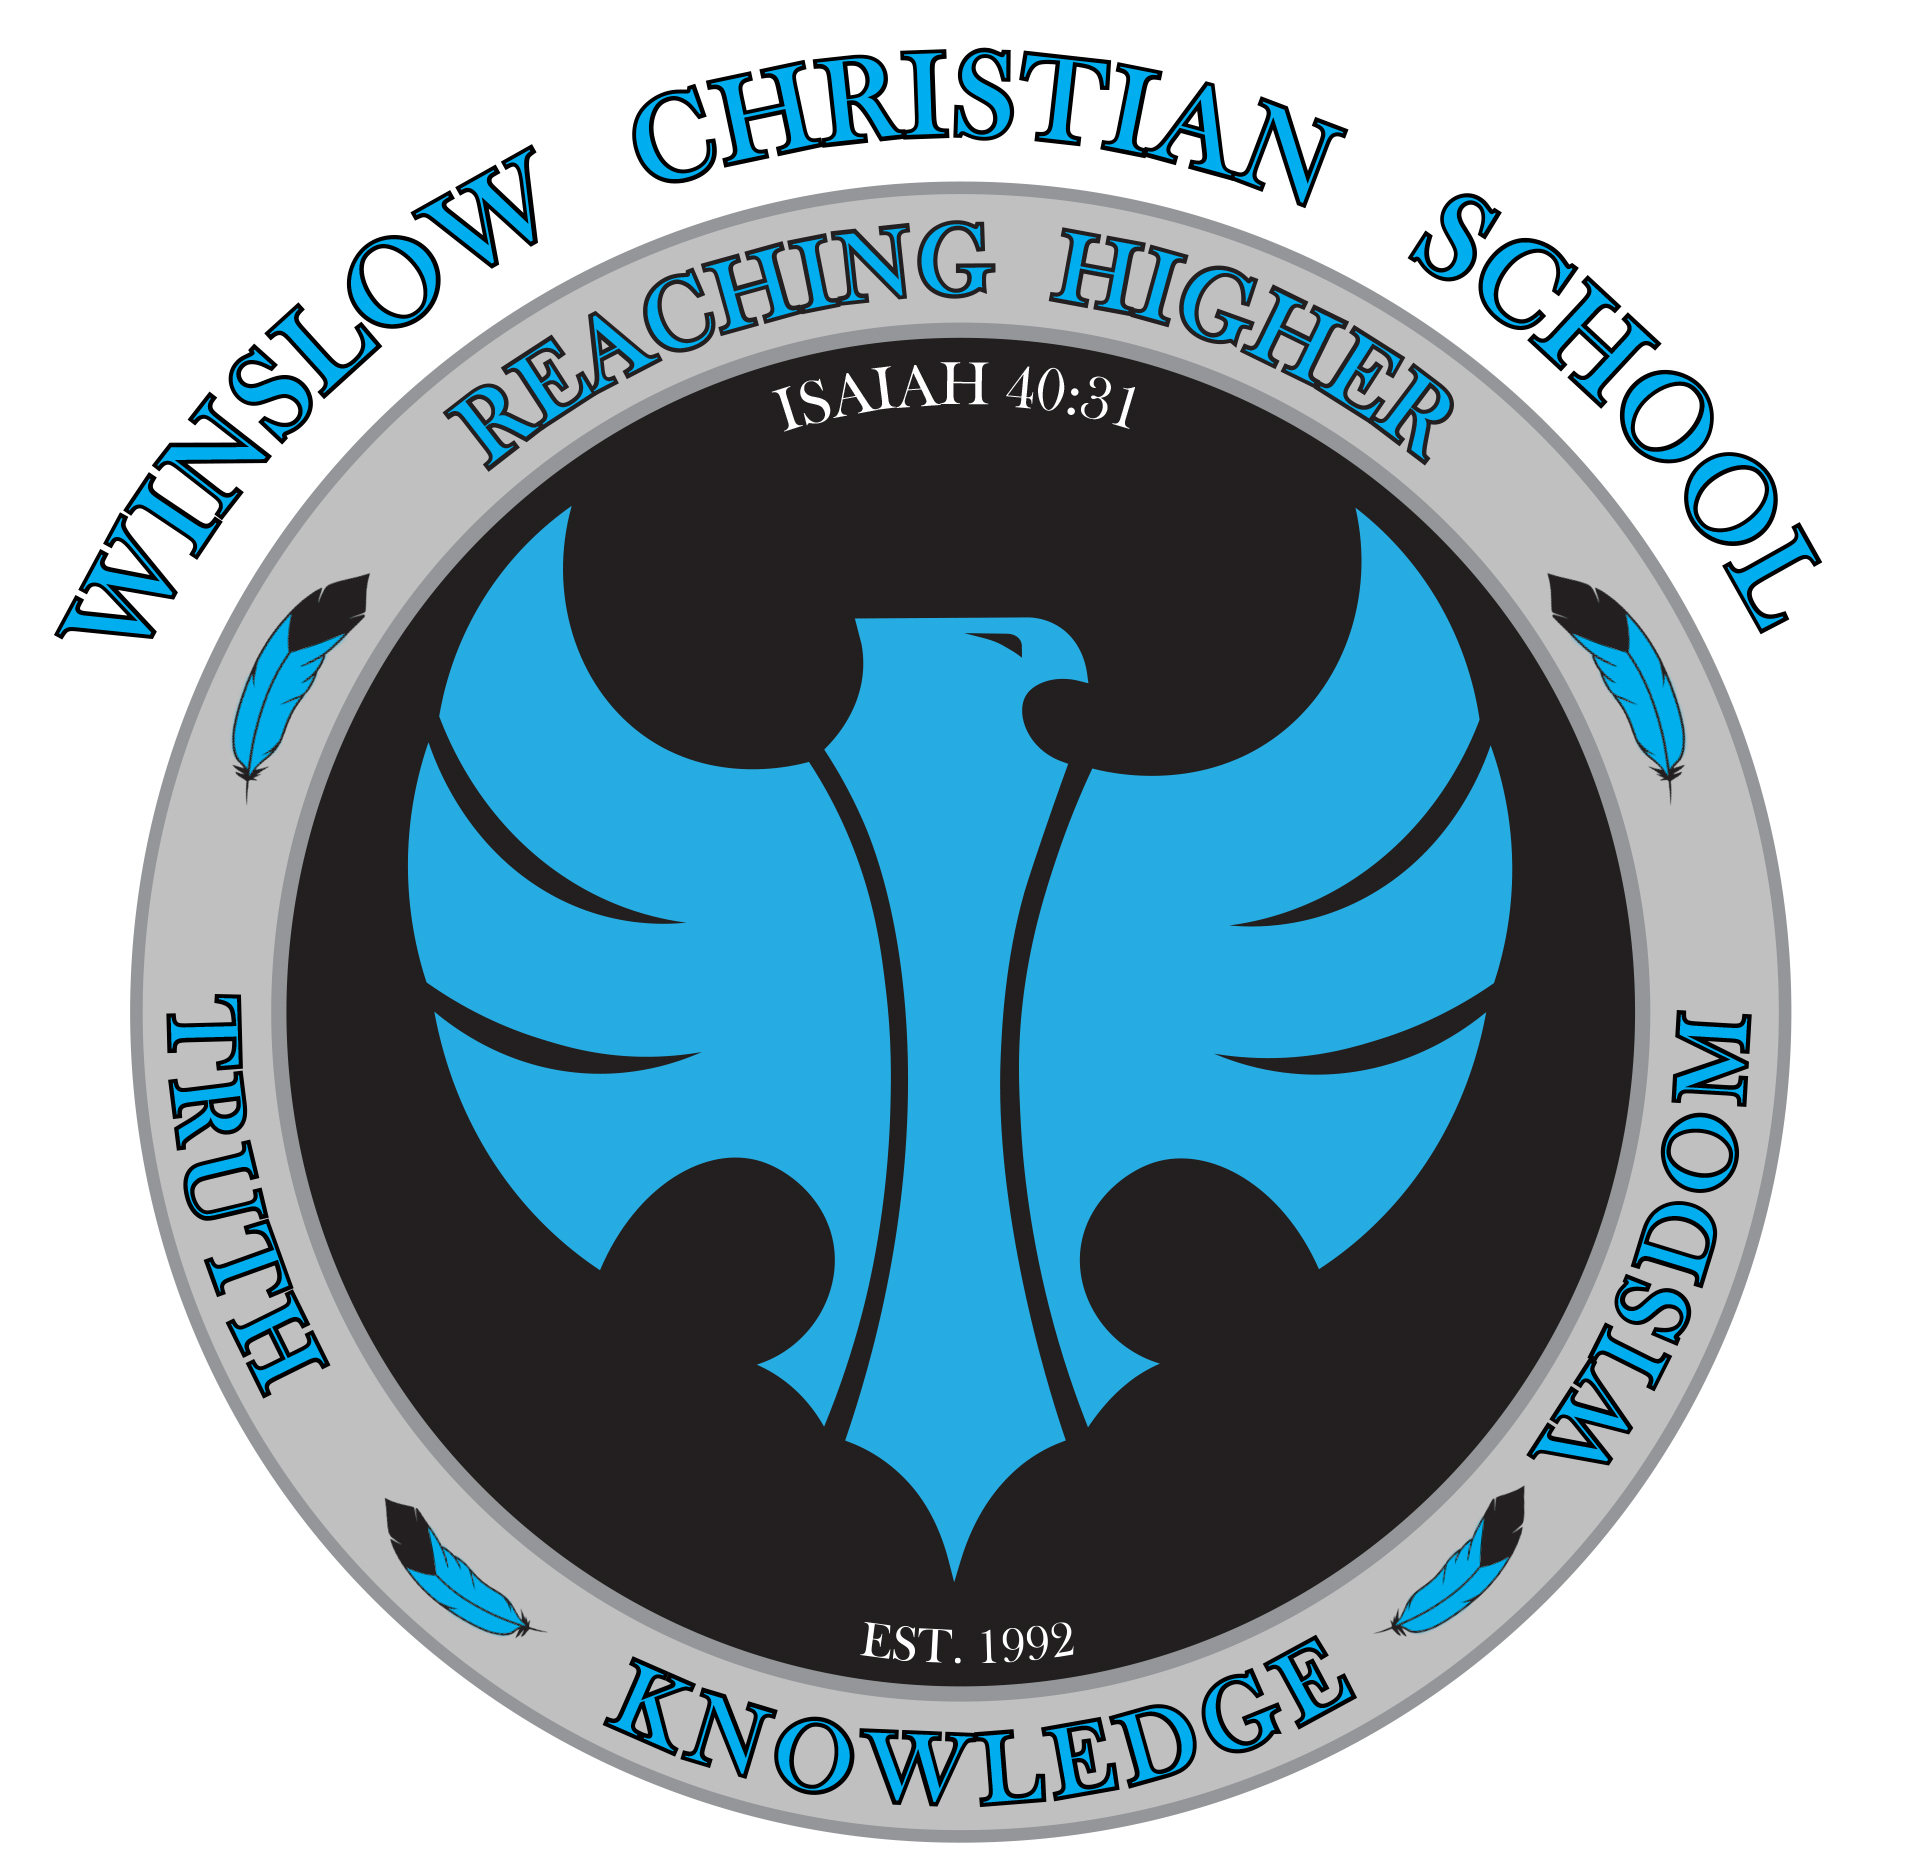 Winslow Christian School logo